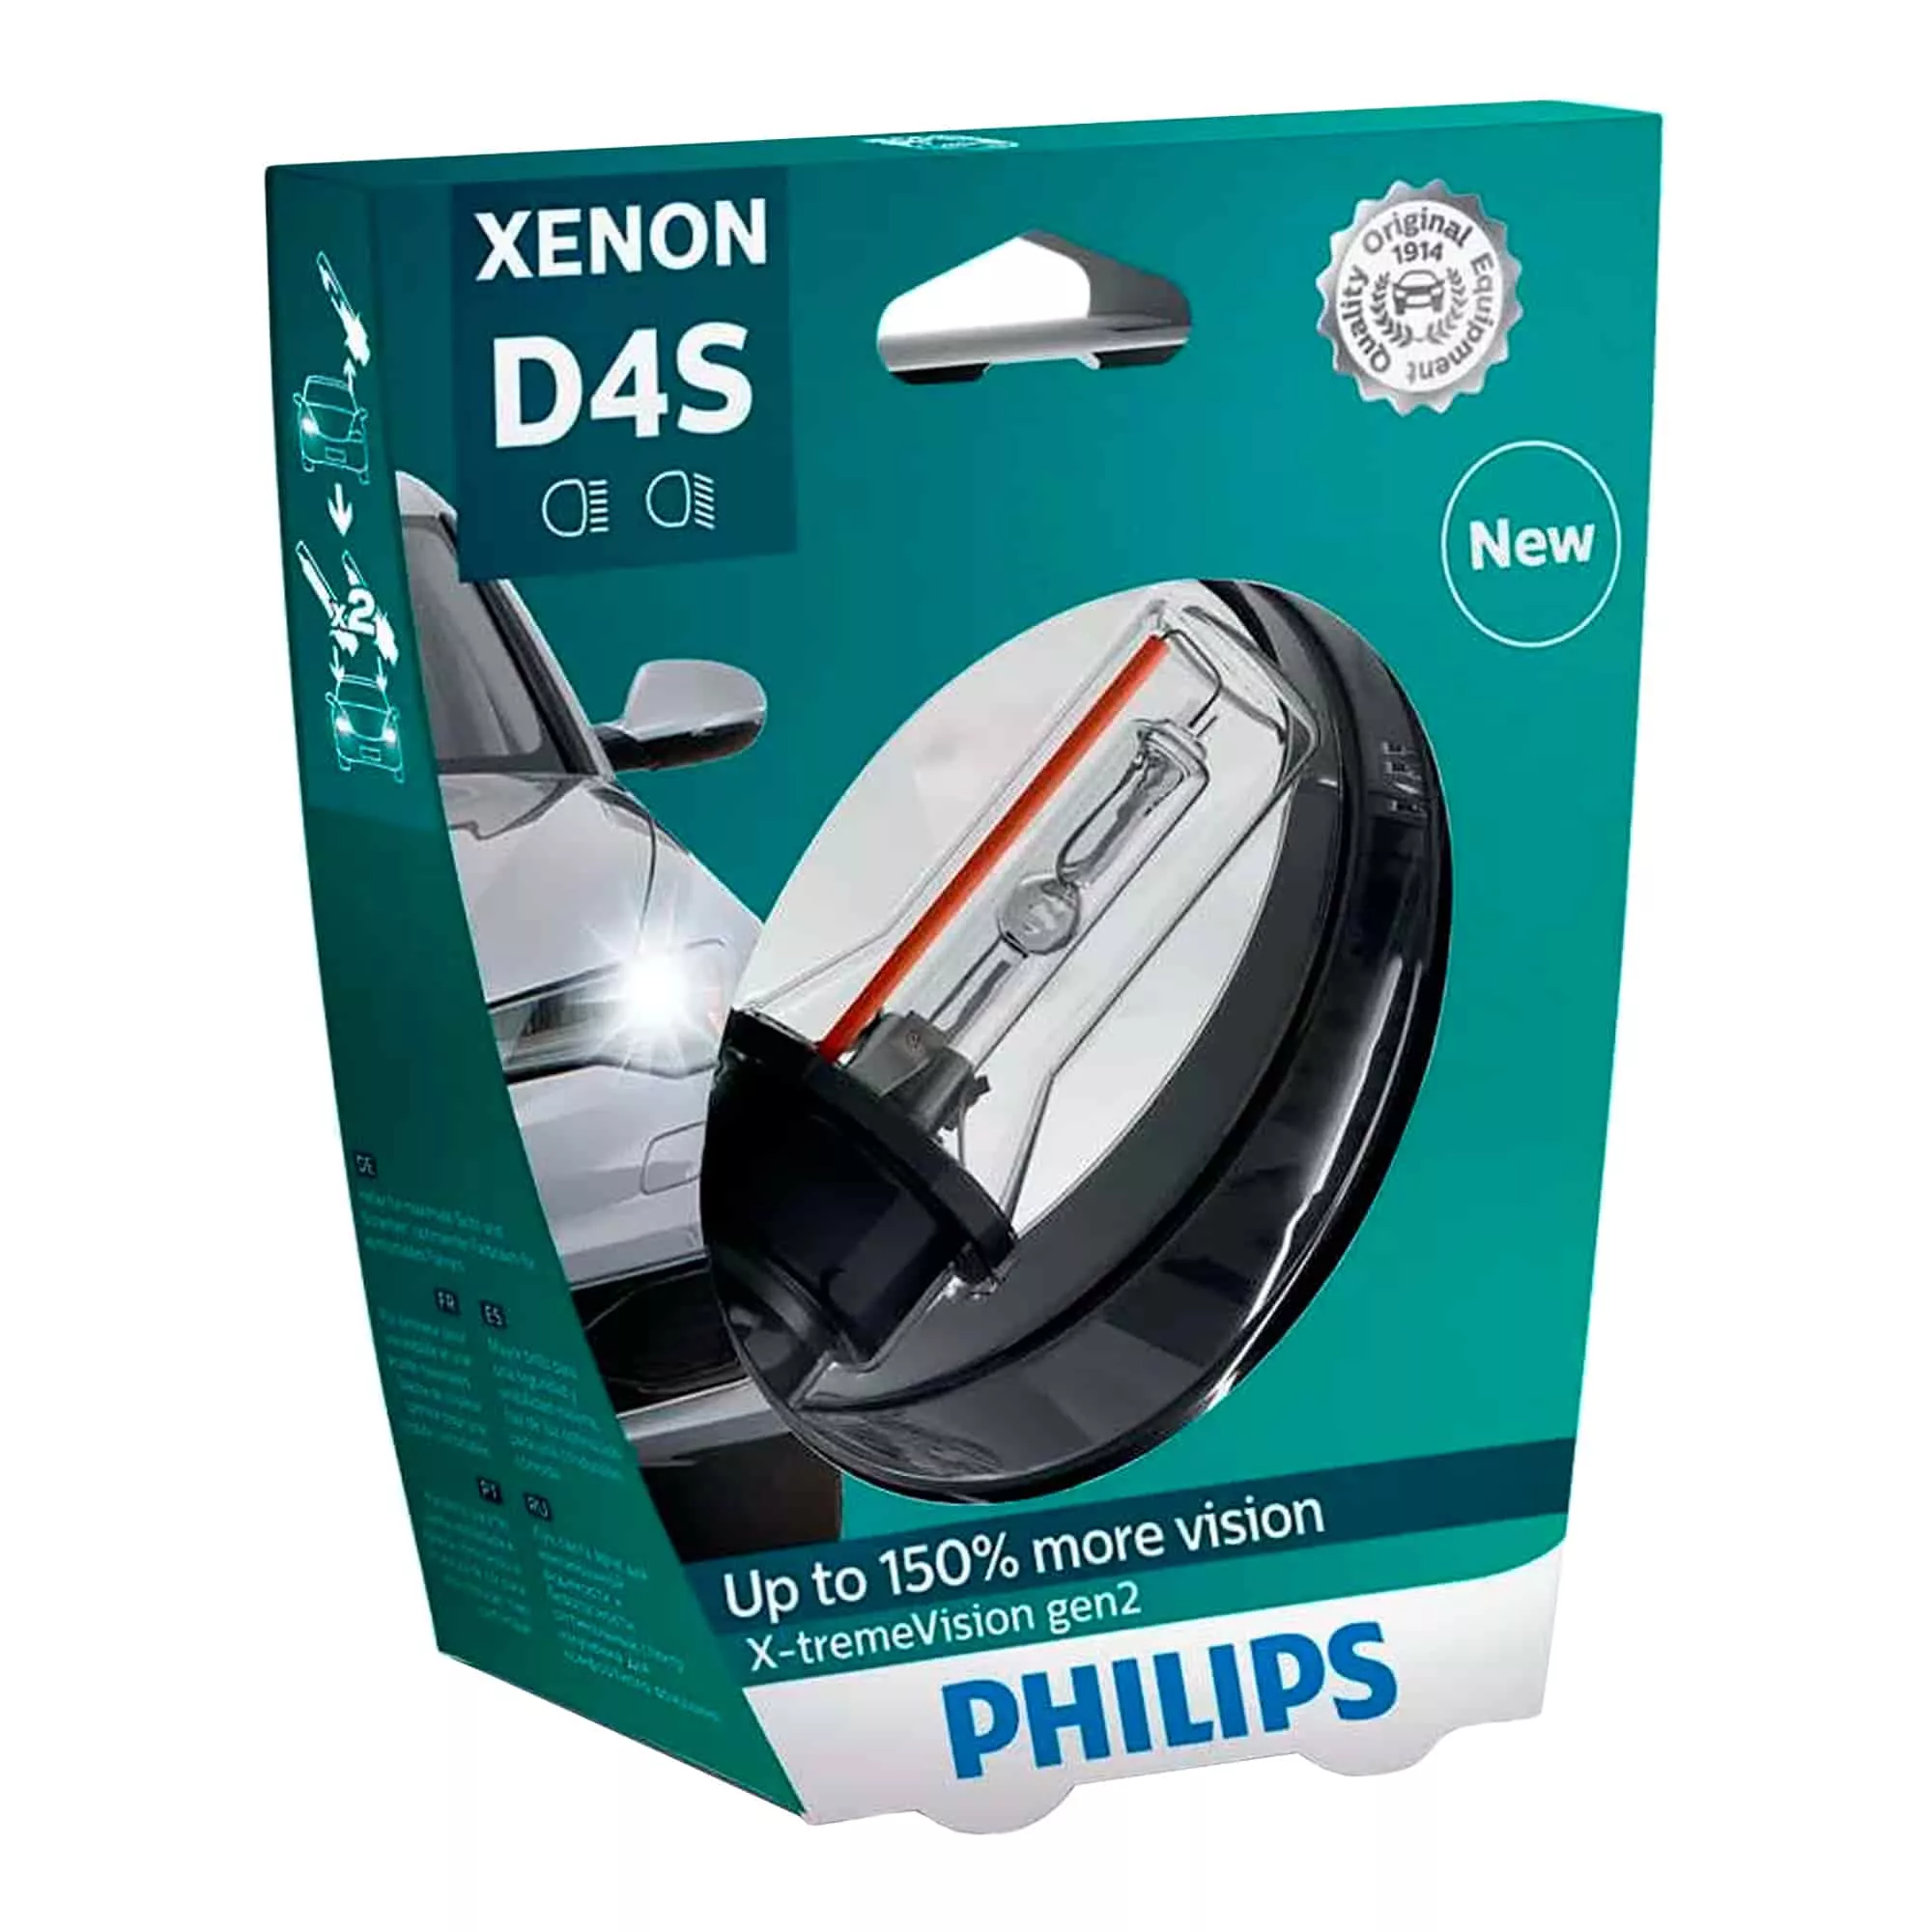 Лампа Philips X-treme Vision gen 2 D4S 42V 35W 42402 XV2 S1